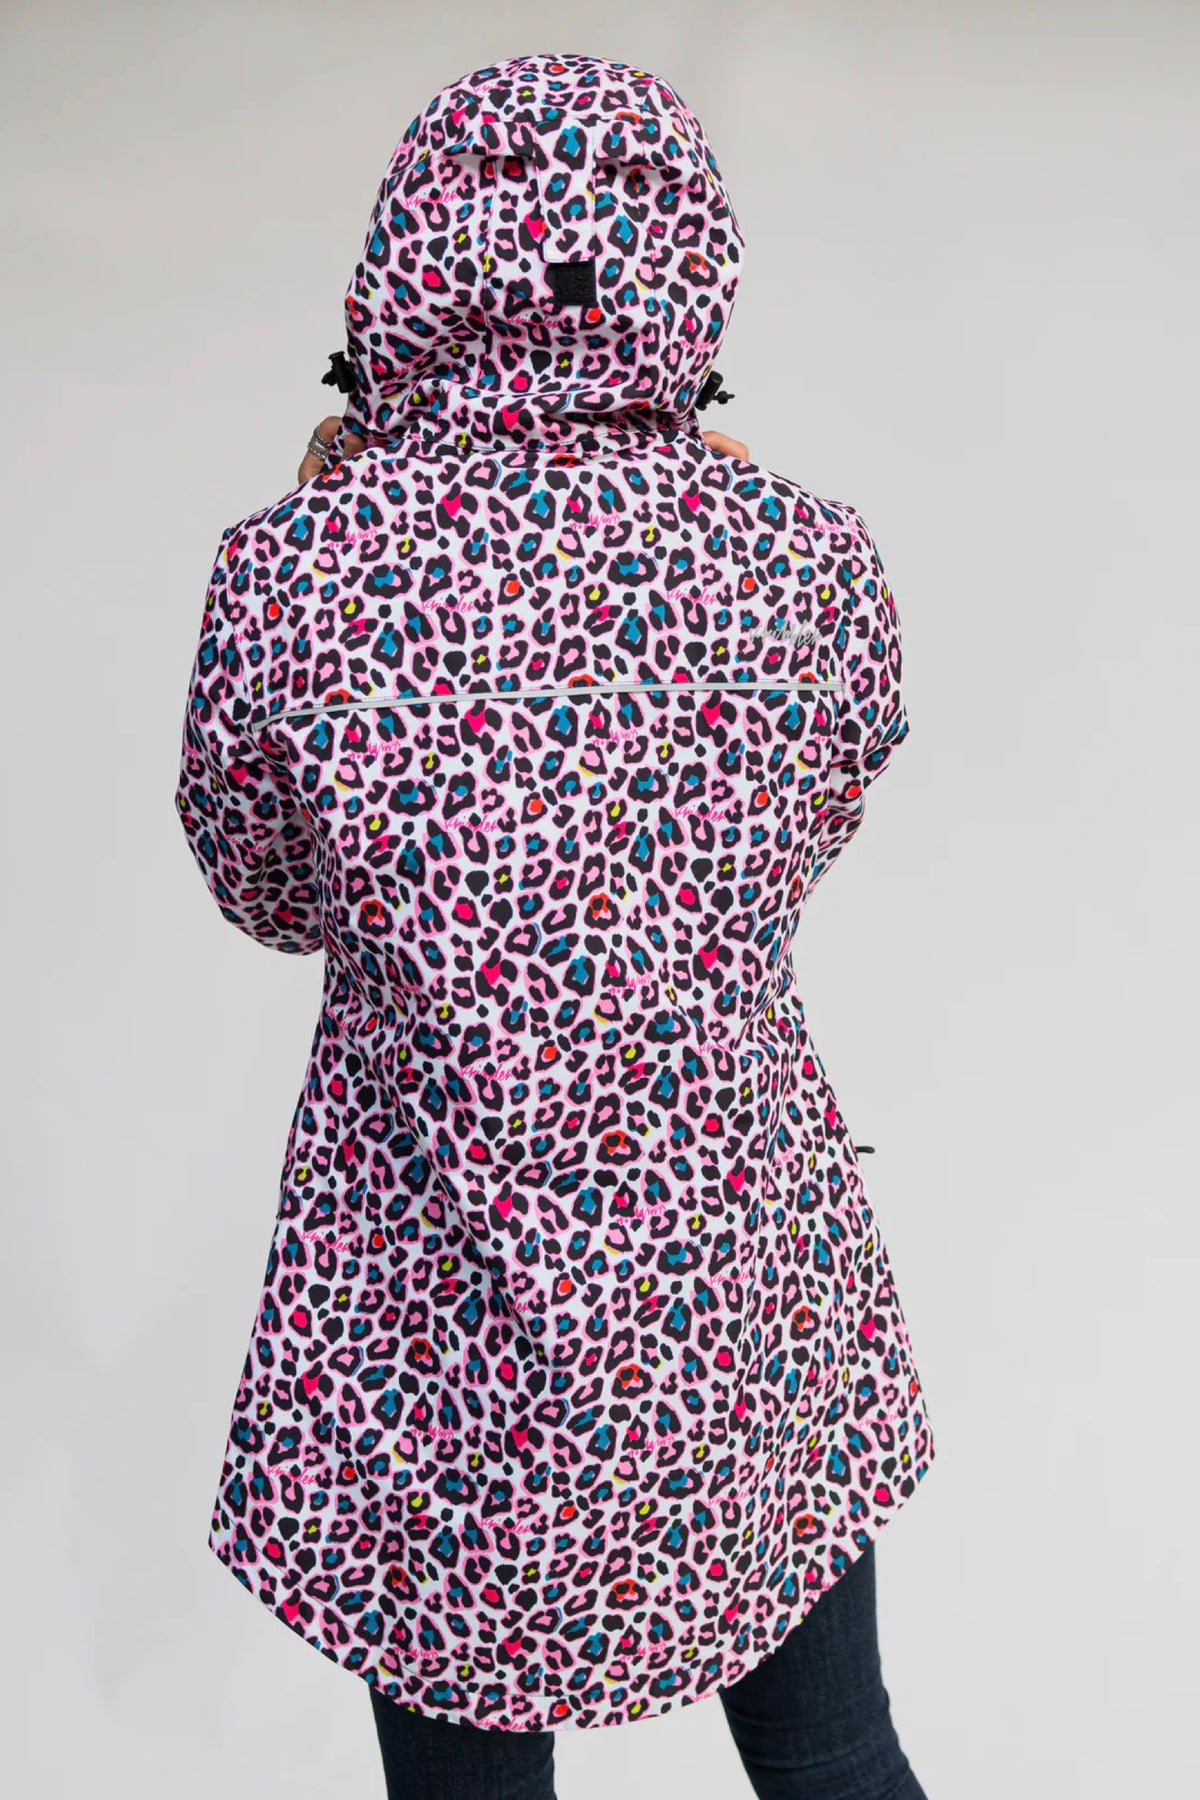 Neon Leopard Waterproof Mesh Lined Raincoat